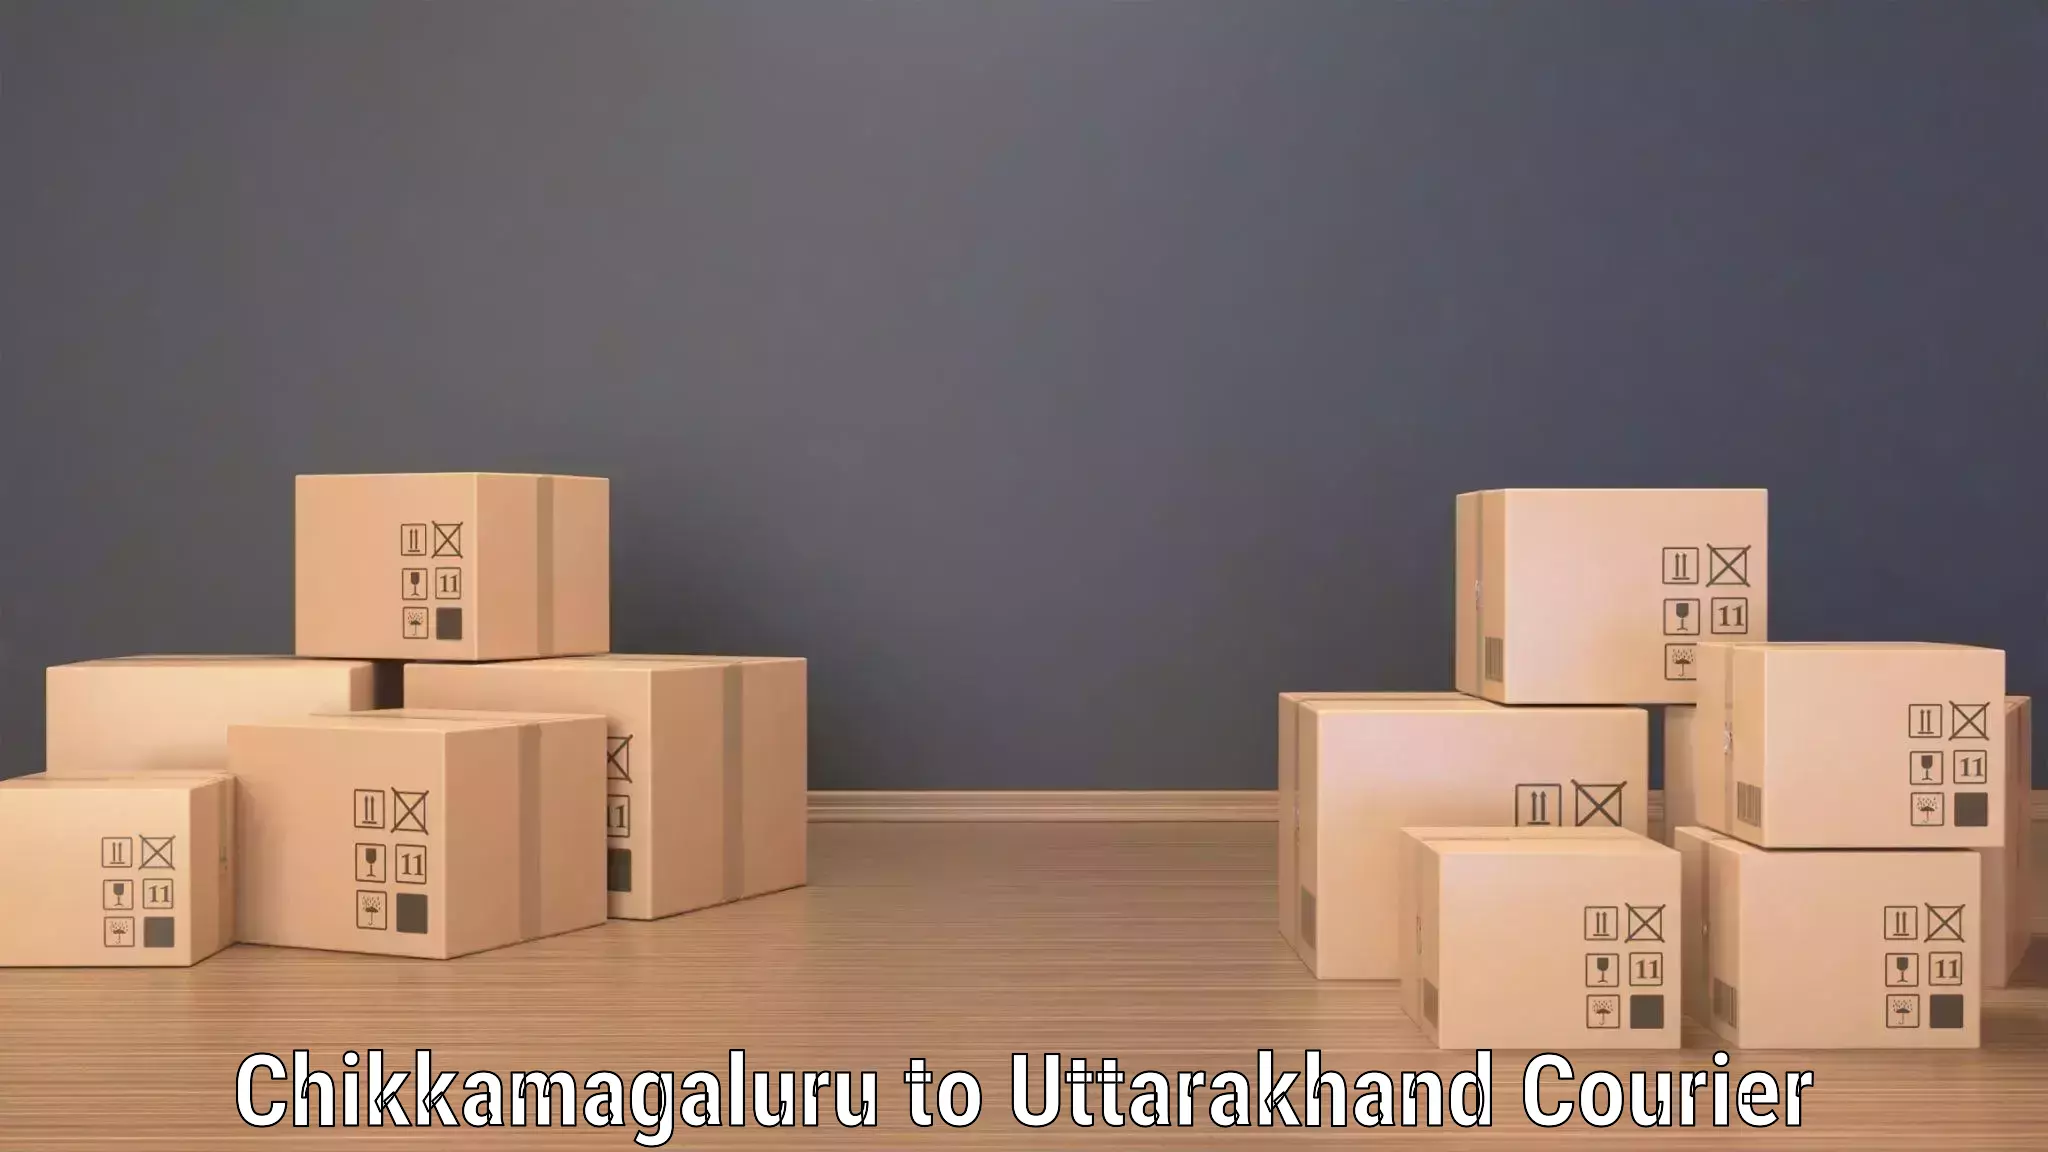 Courier service comparison Chikkamagaluru to Rishikesh